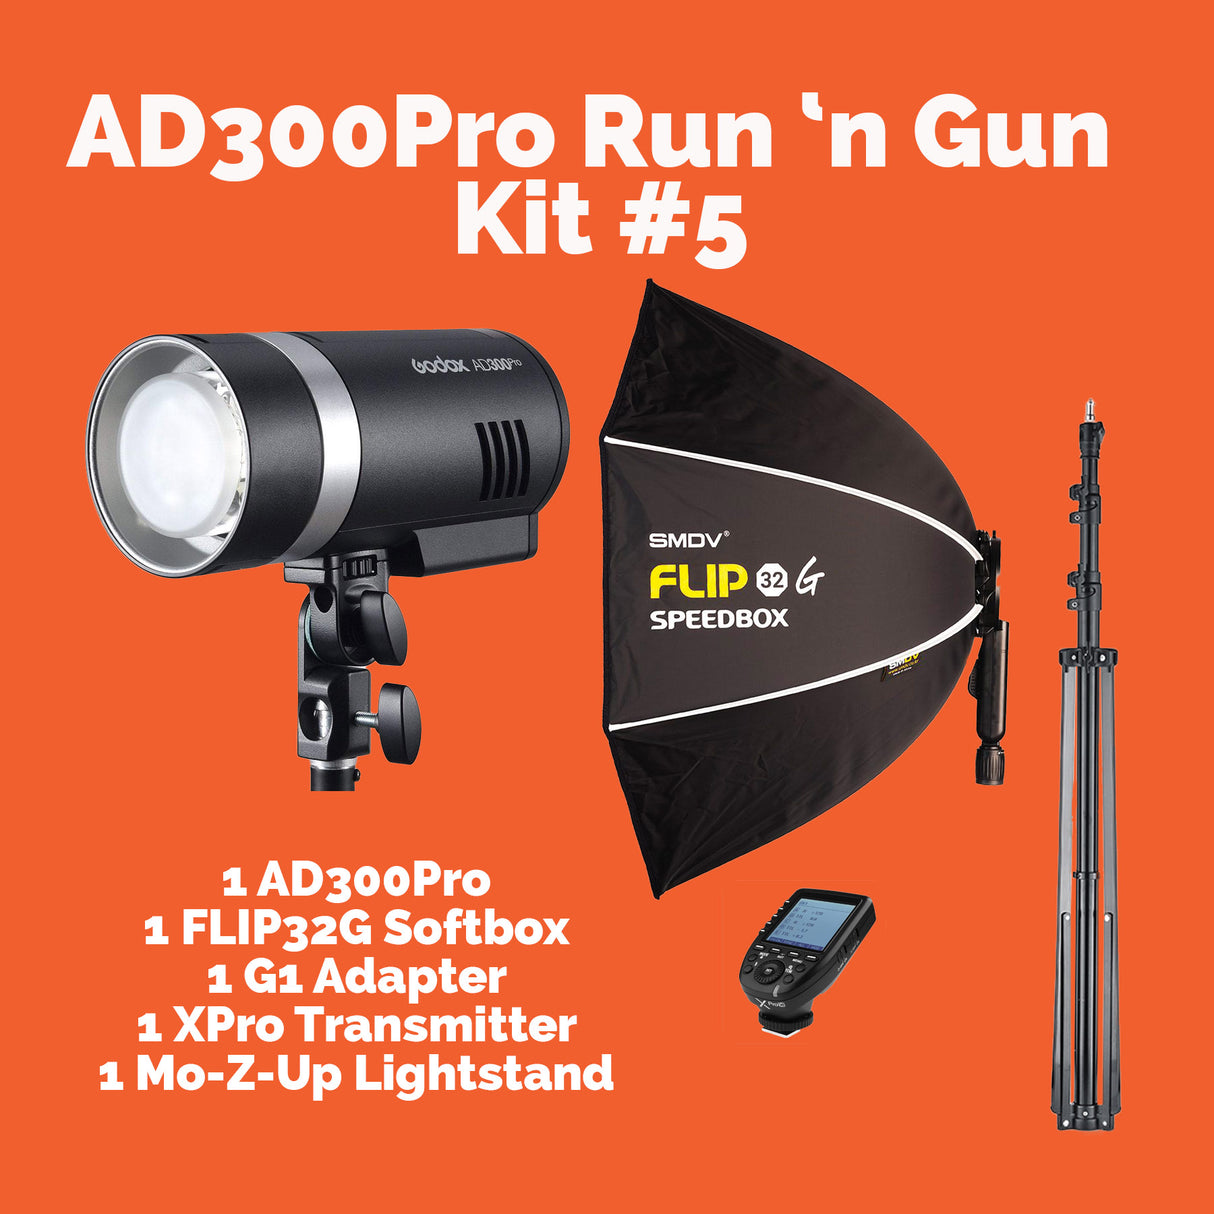 AD300Pro Run n Gun Kit #5